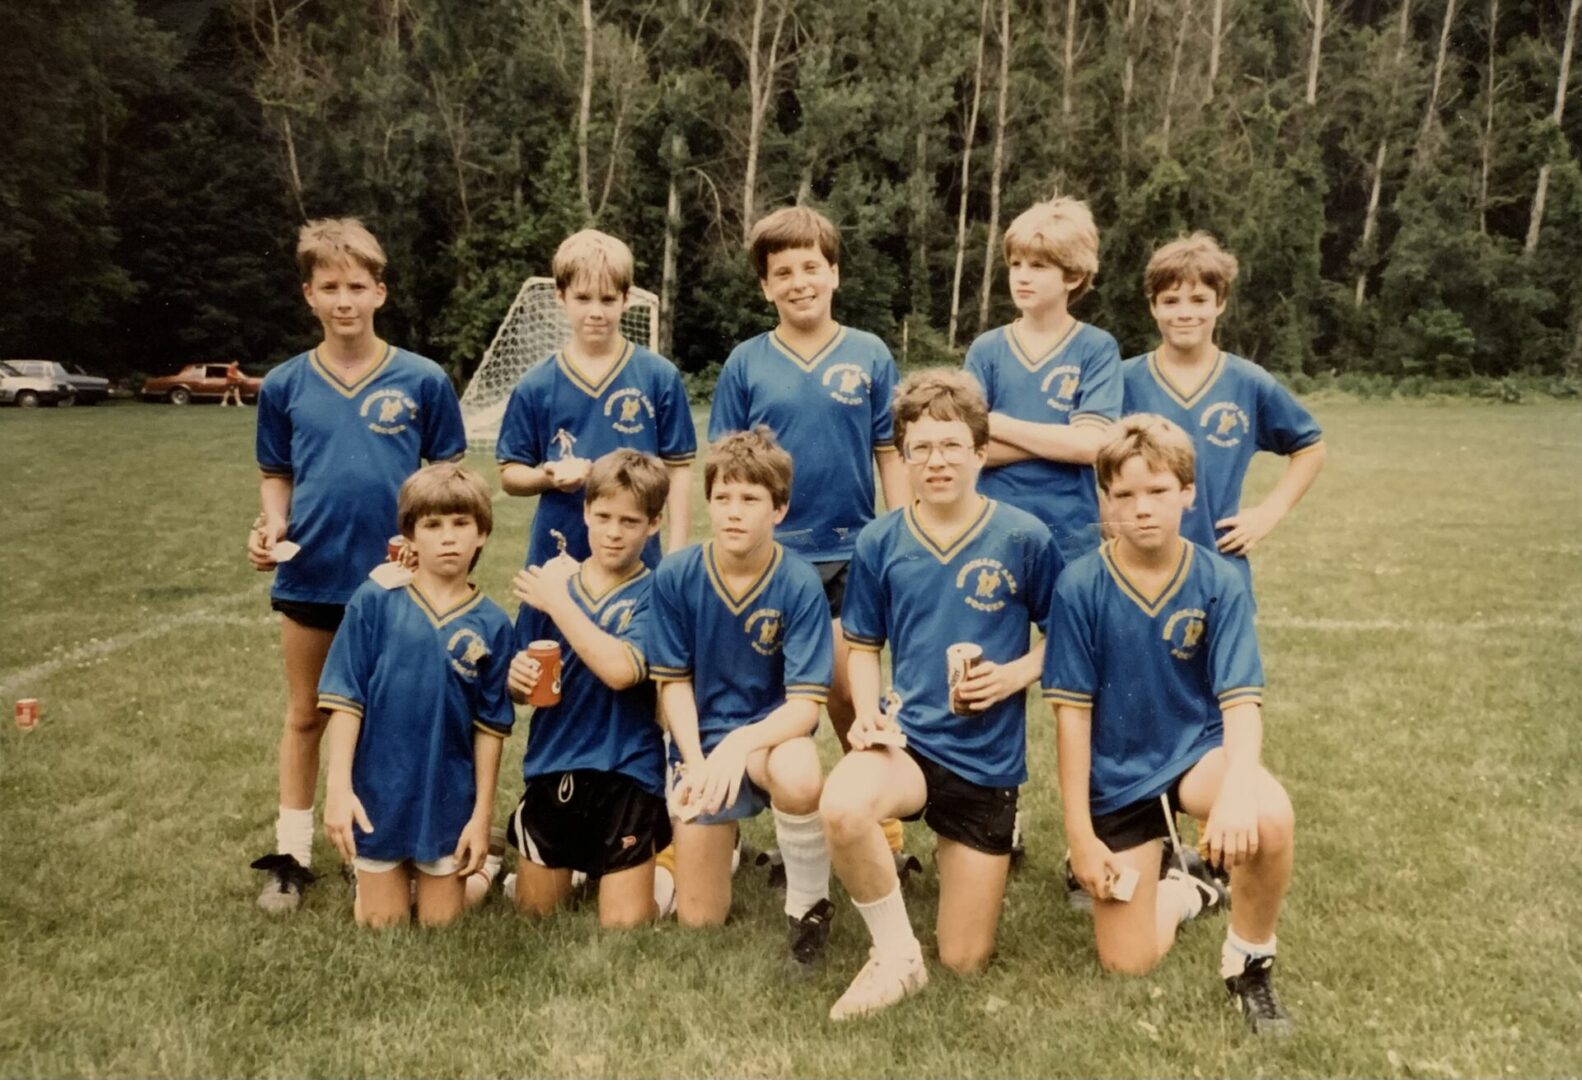 Image of 1985 soccer team posing